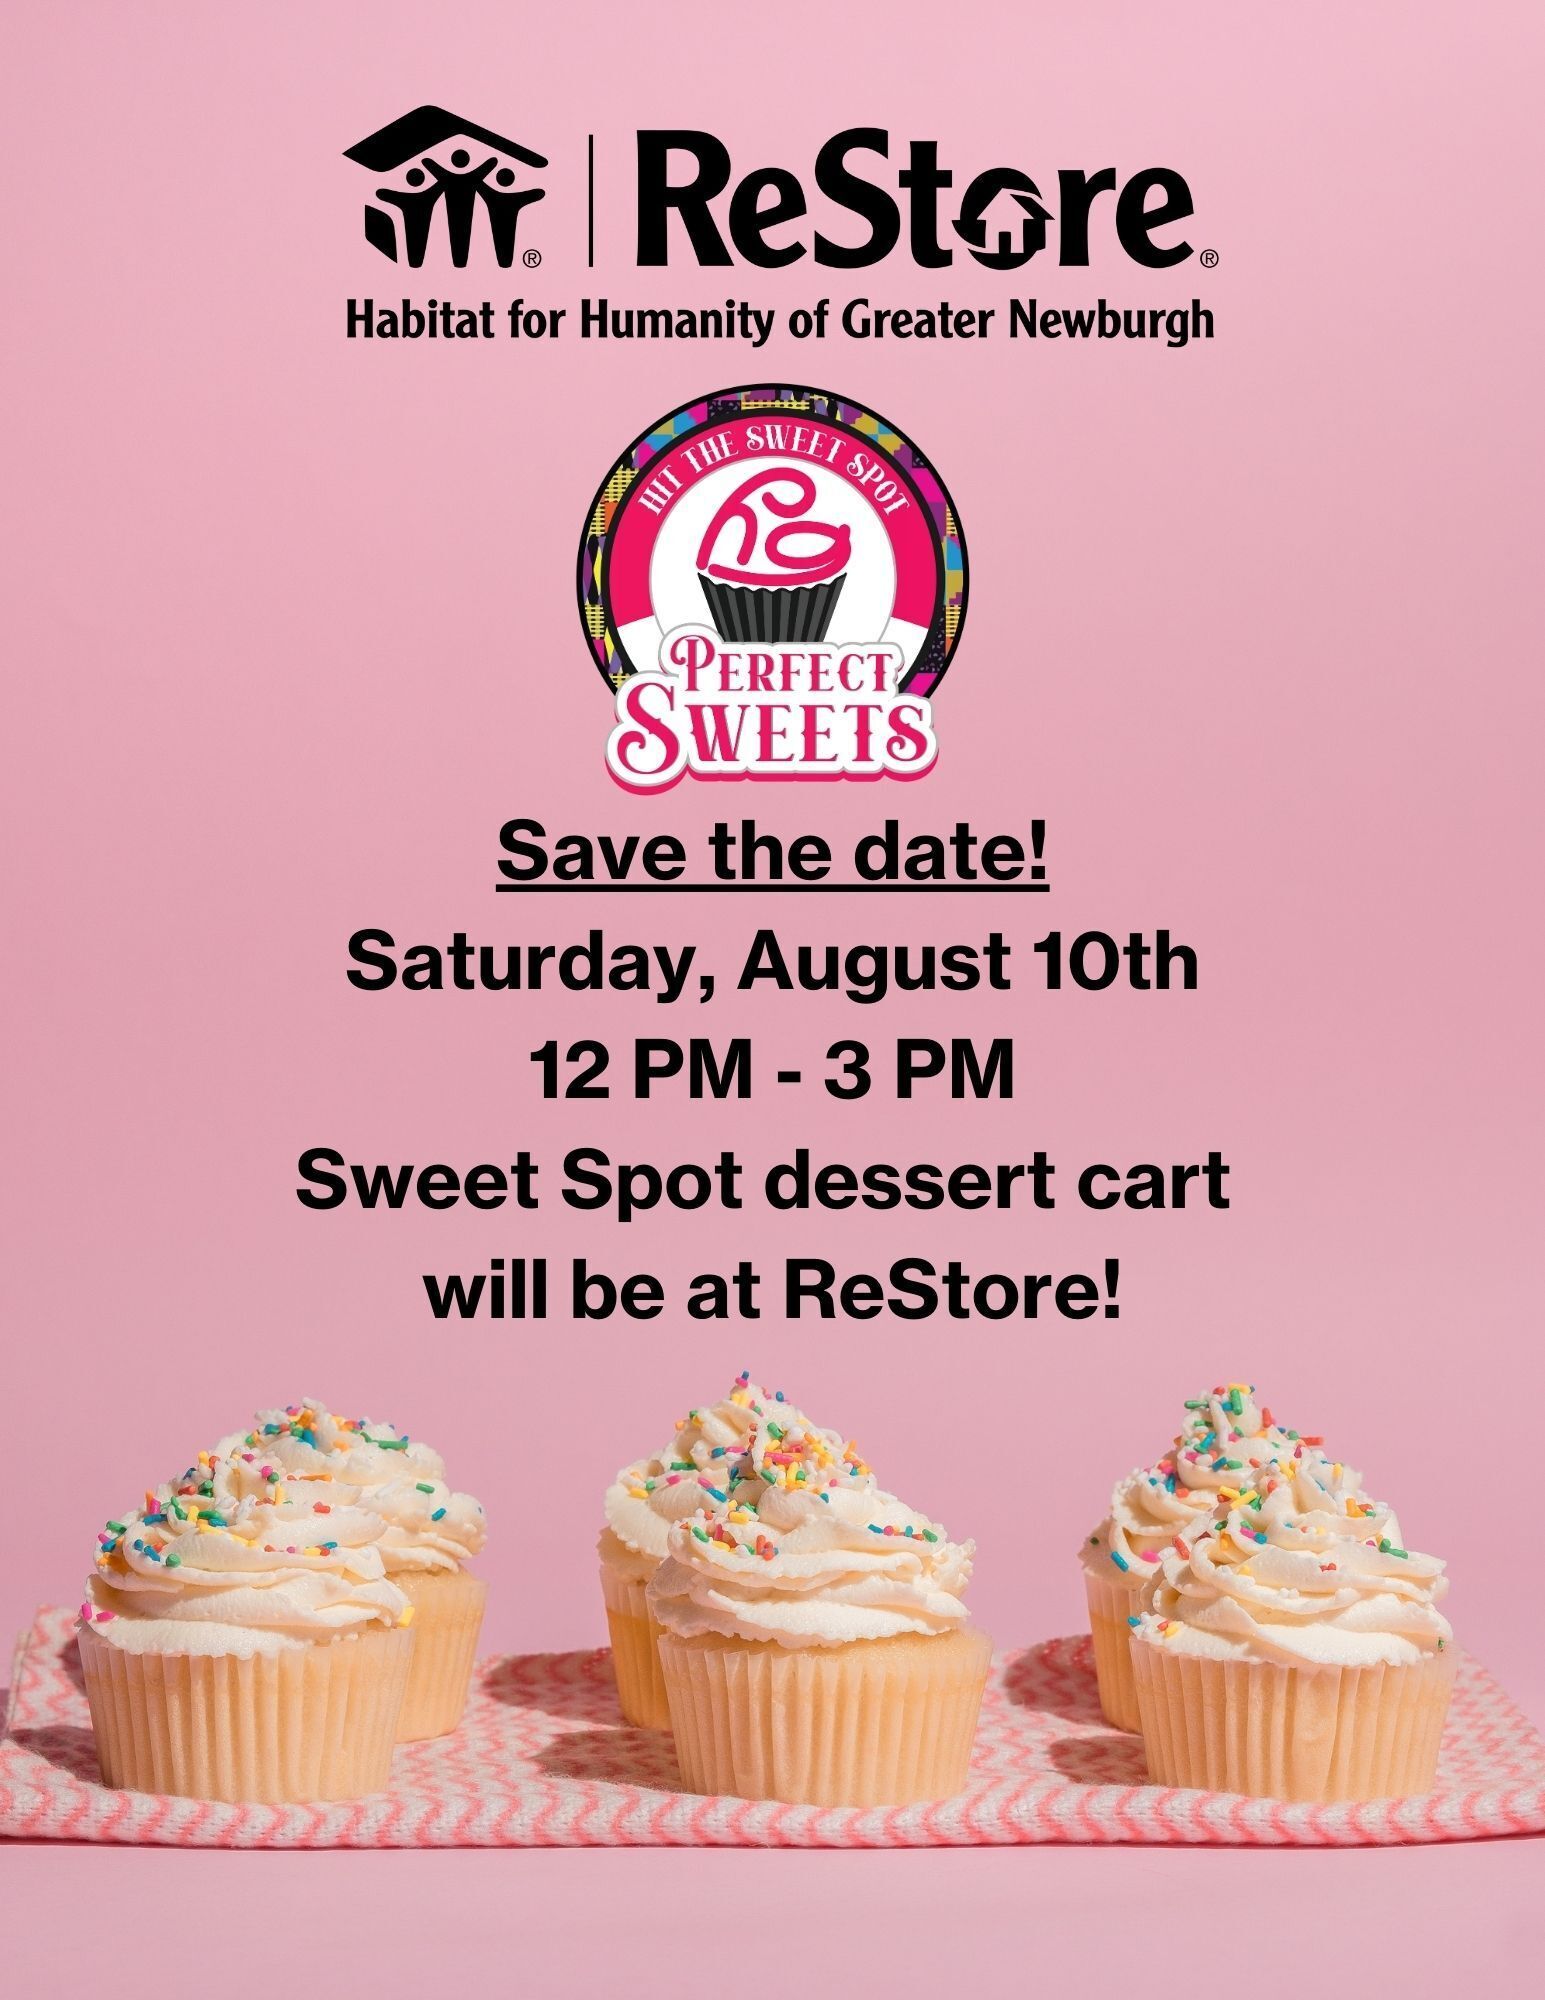 Perfect Sweets Sweet Spot dessert cart at ReStore!